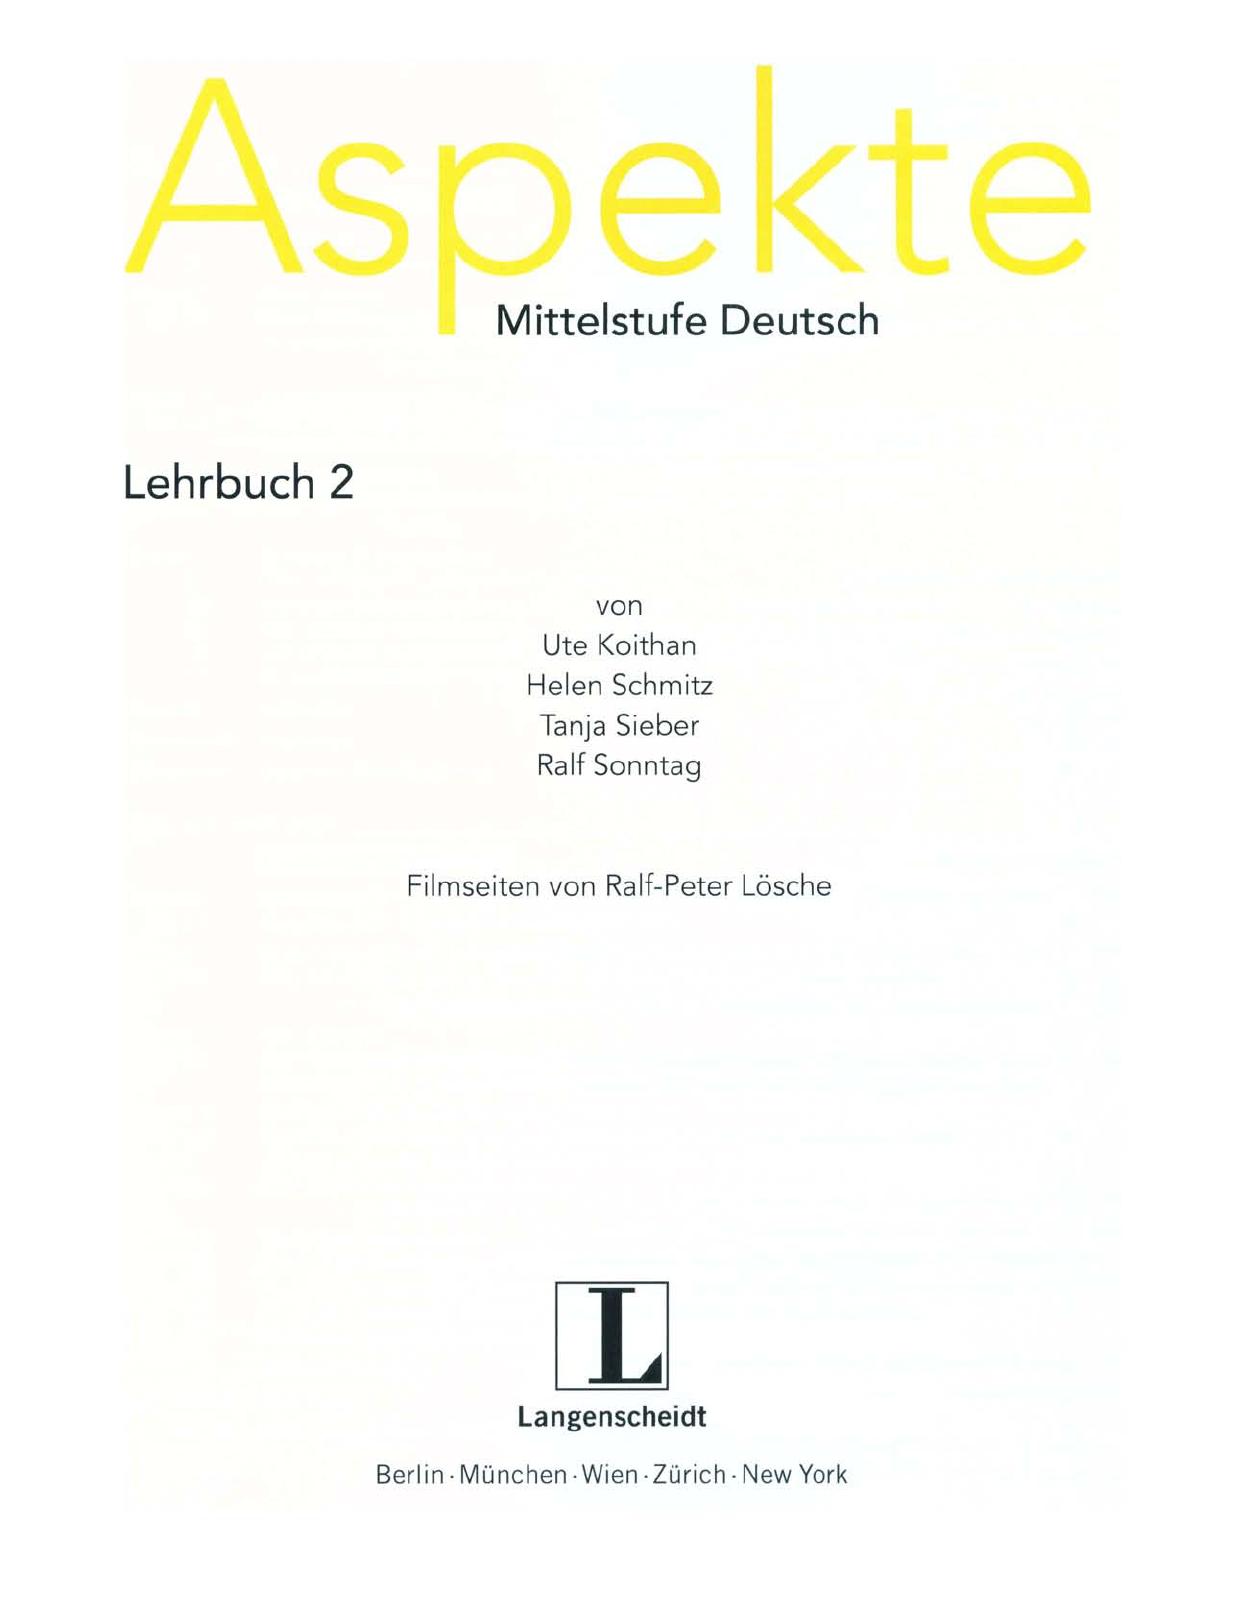 free download program aspekte mittelstufe deutsch b2 pdf file